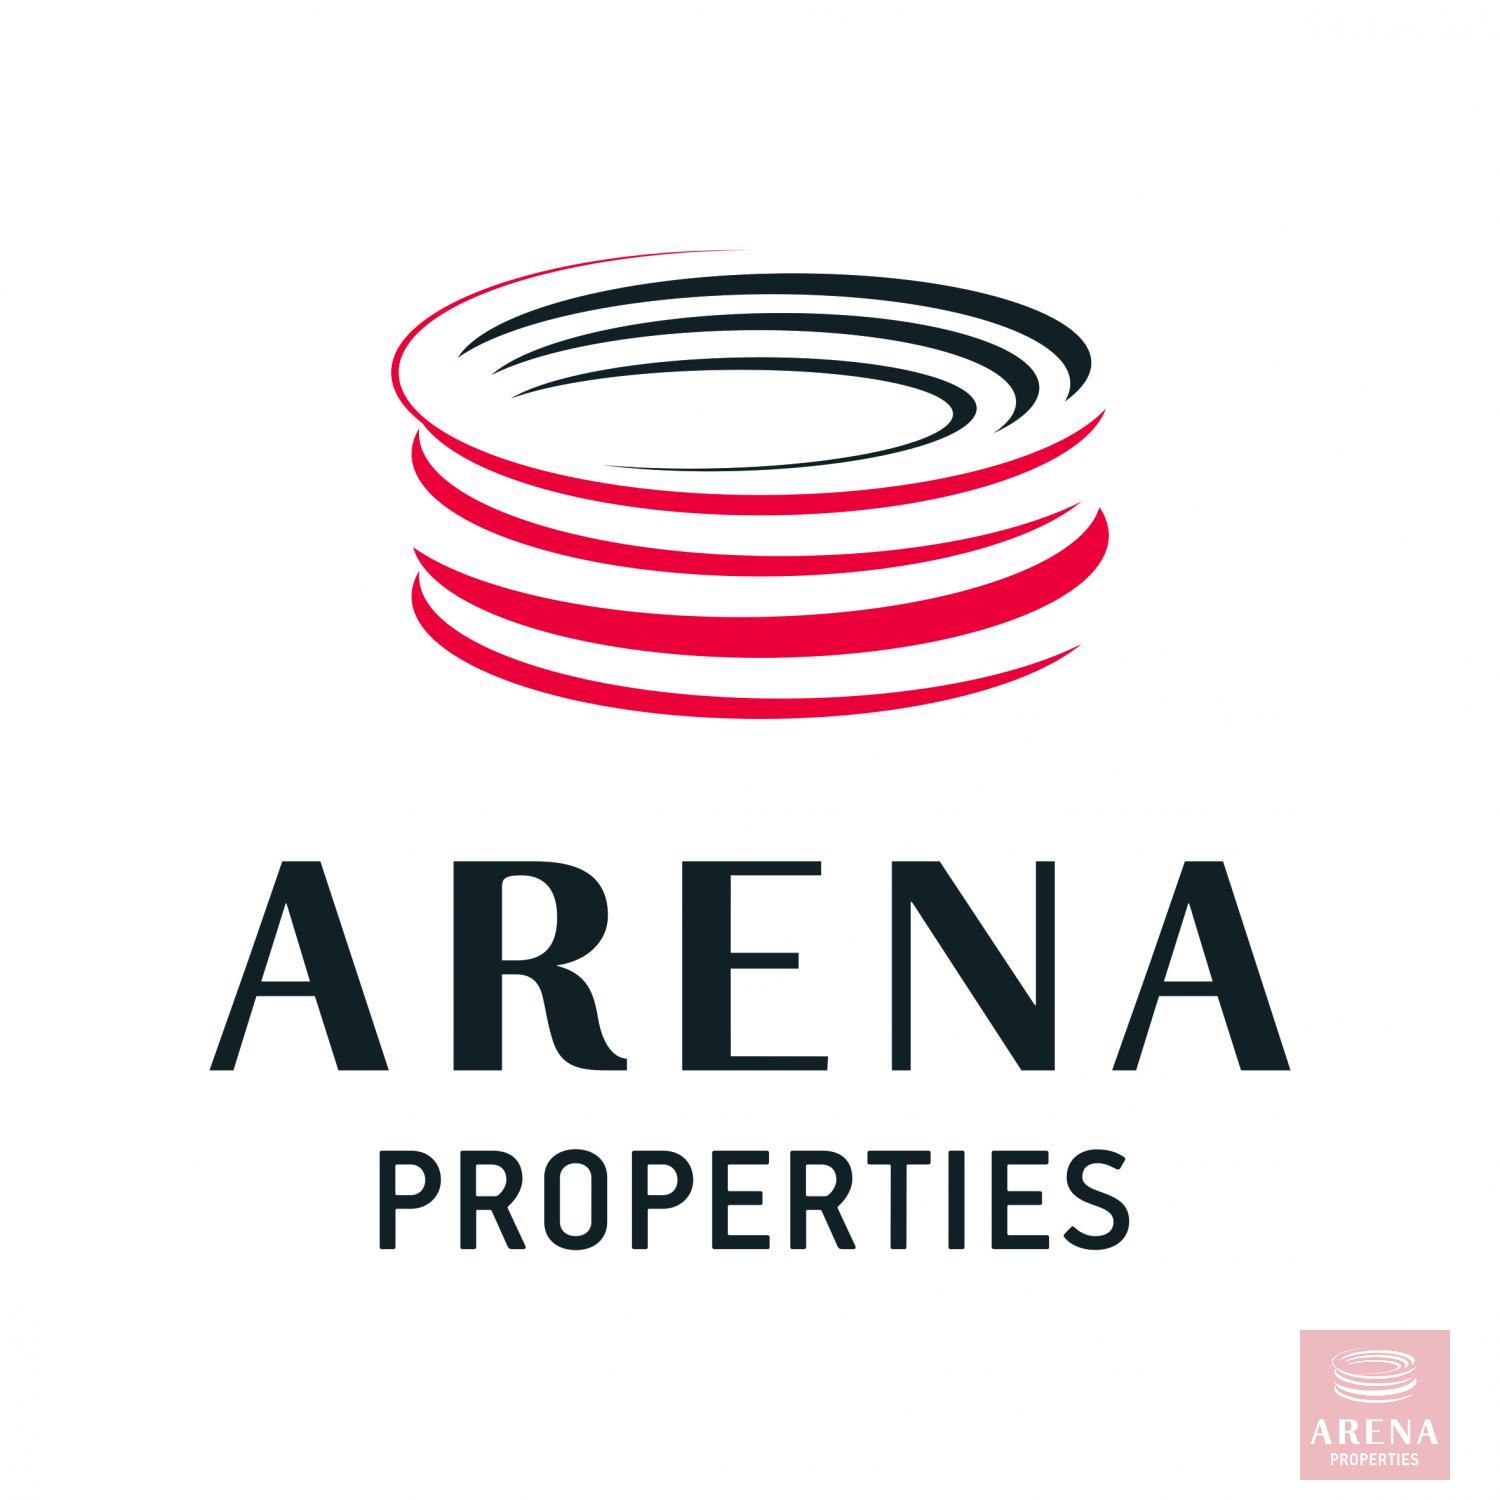 arena properties logo white 0